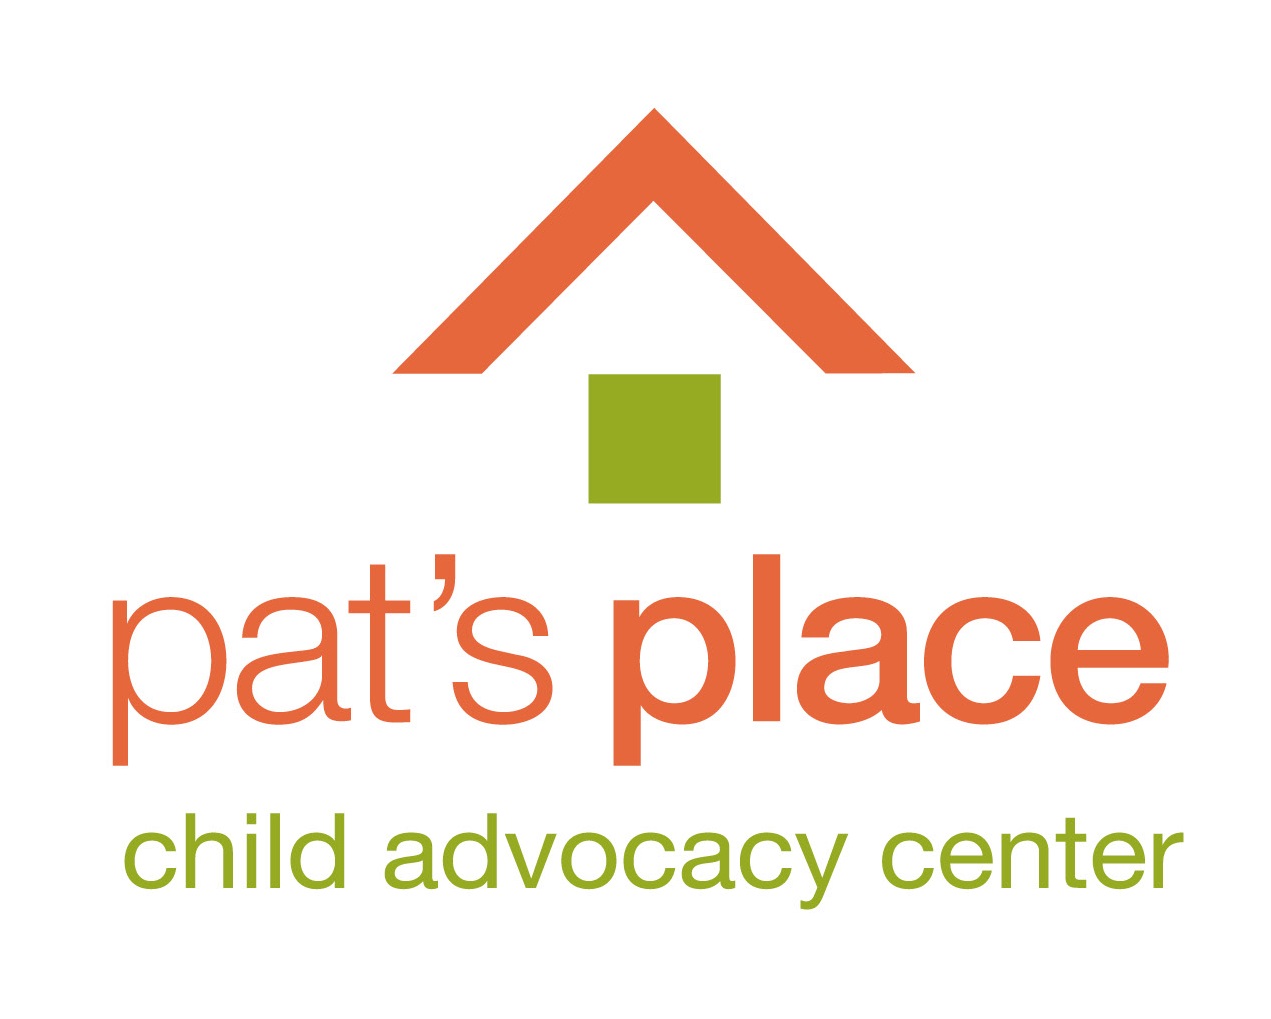 Pat's Place Child Advocacy Center logo.